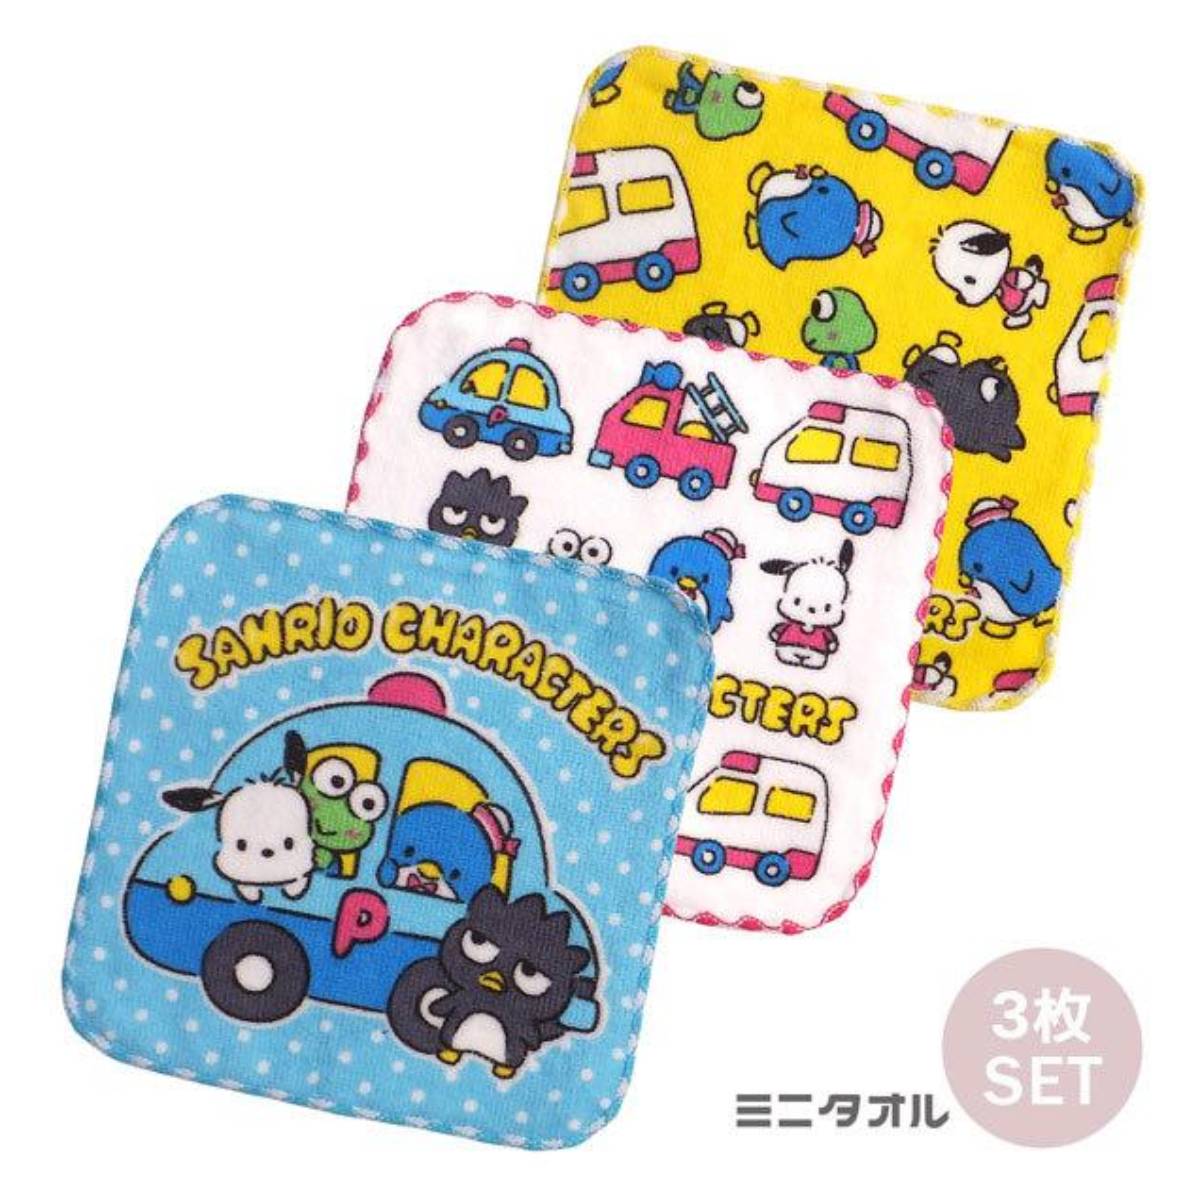 Towel Mini - Sanrio Boy 3in1 (Japan Edition)